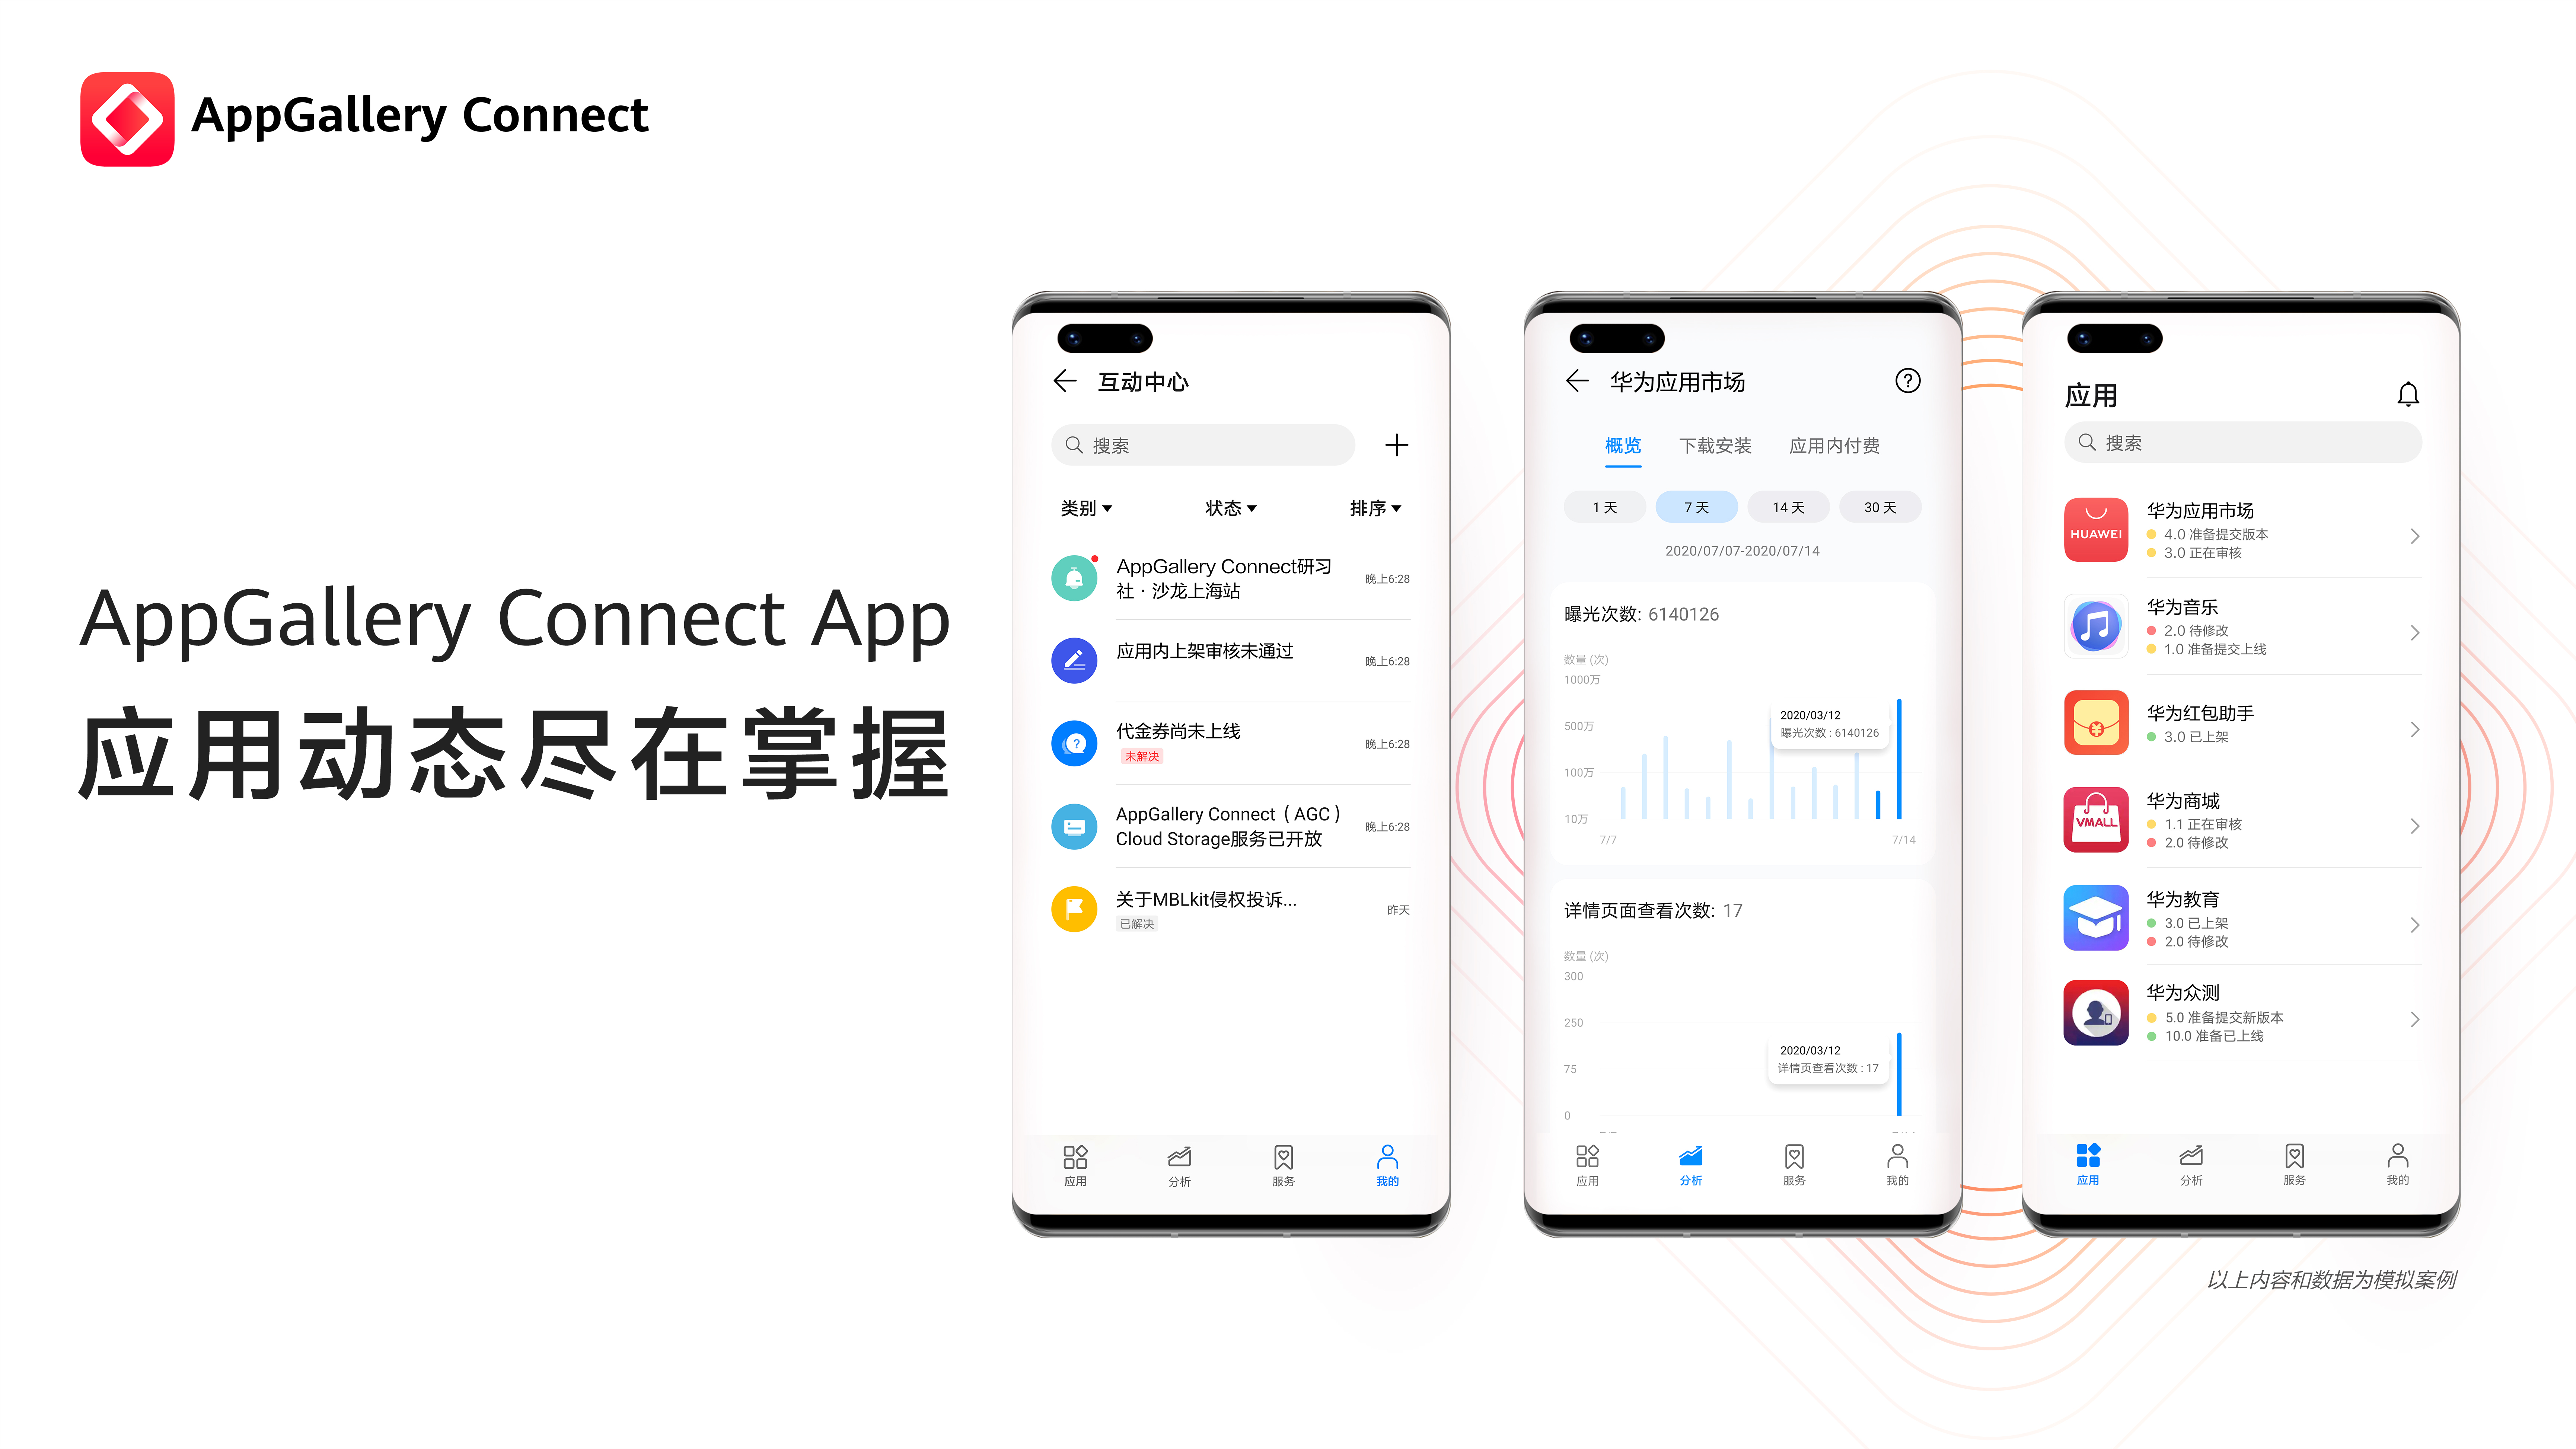 HUAWEI AppGallery Connect 宣布推出移动端App，应用全生命周期服务触手可及